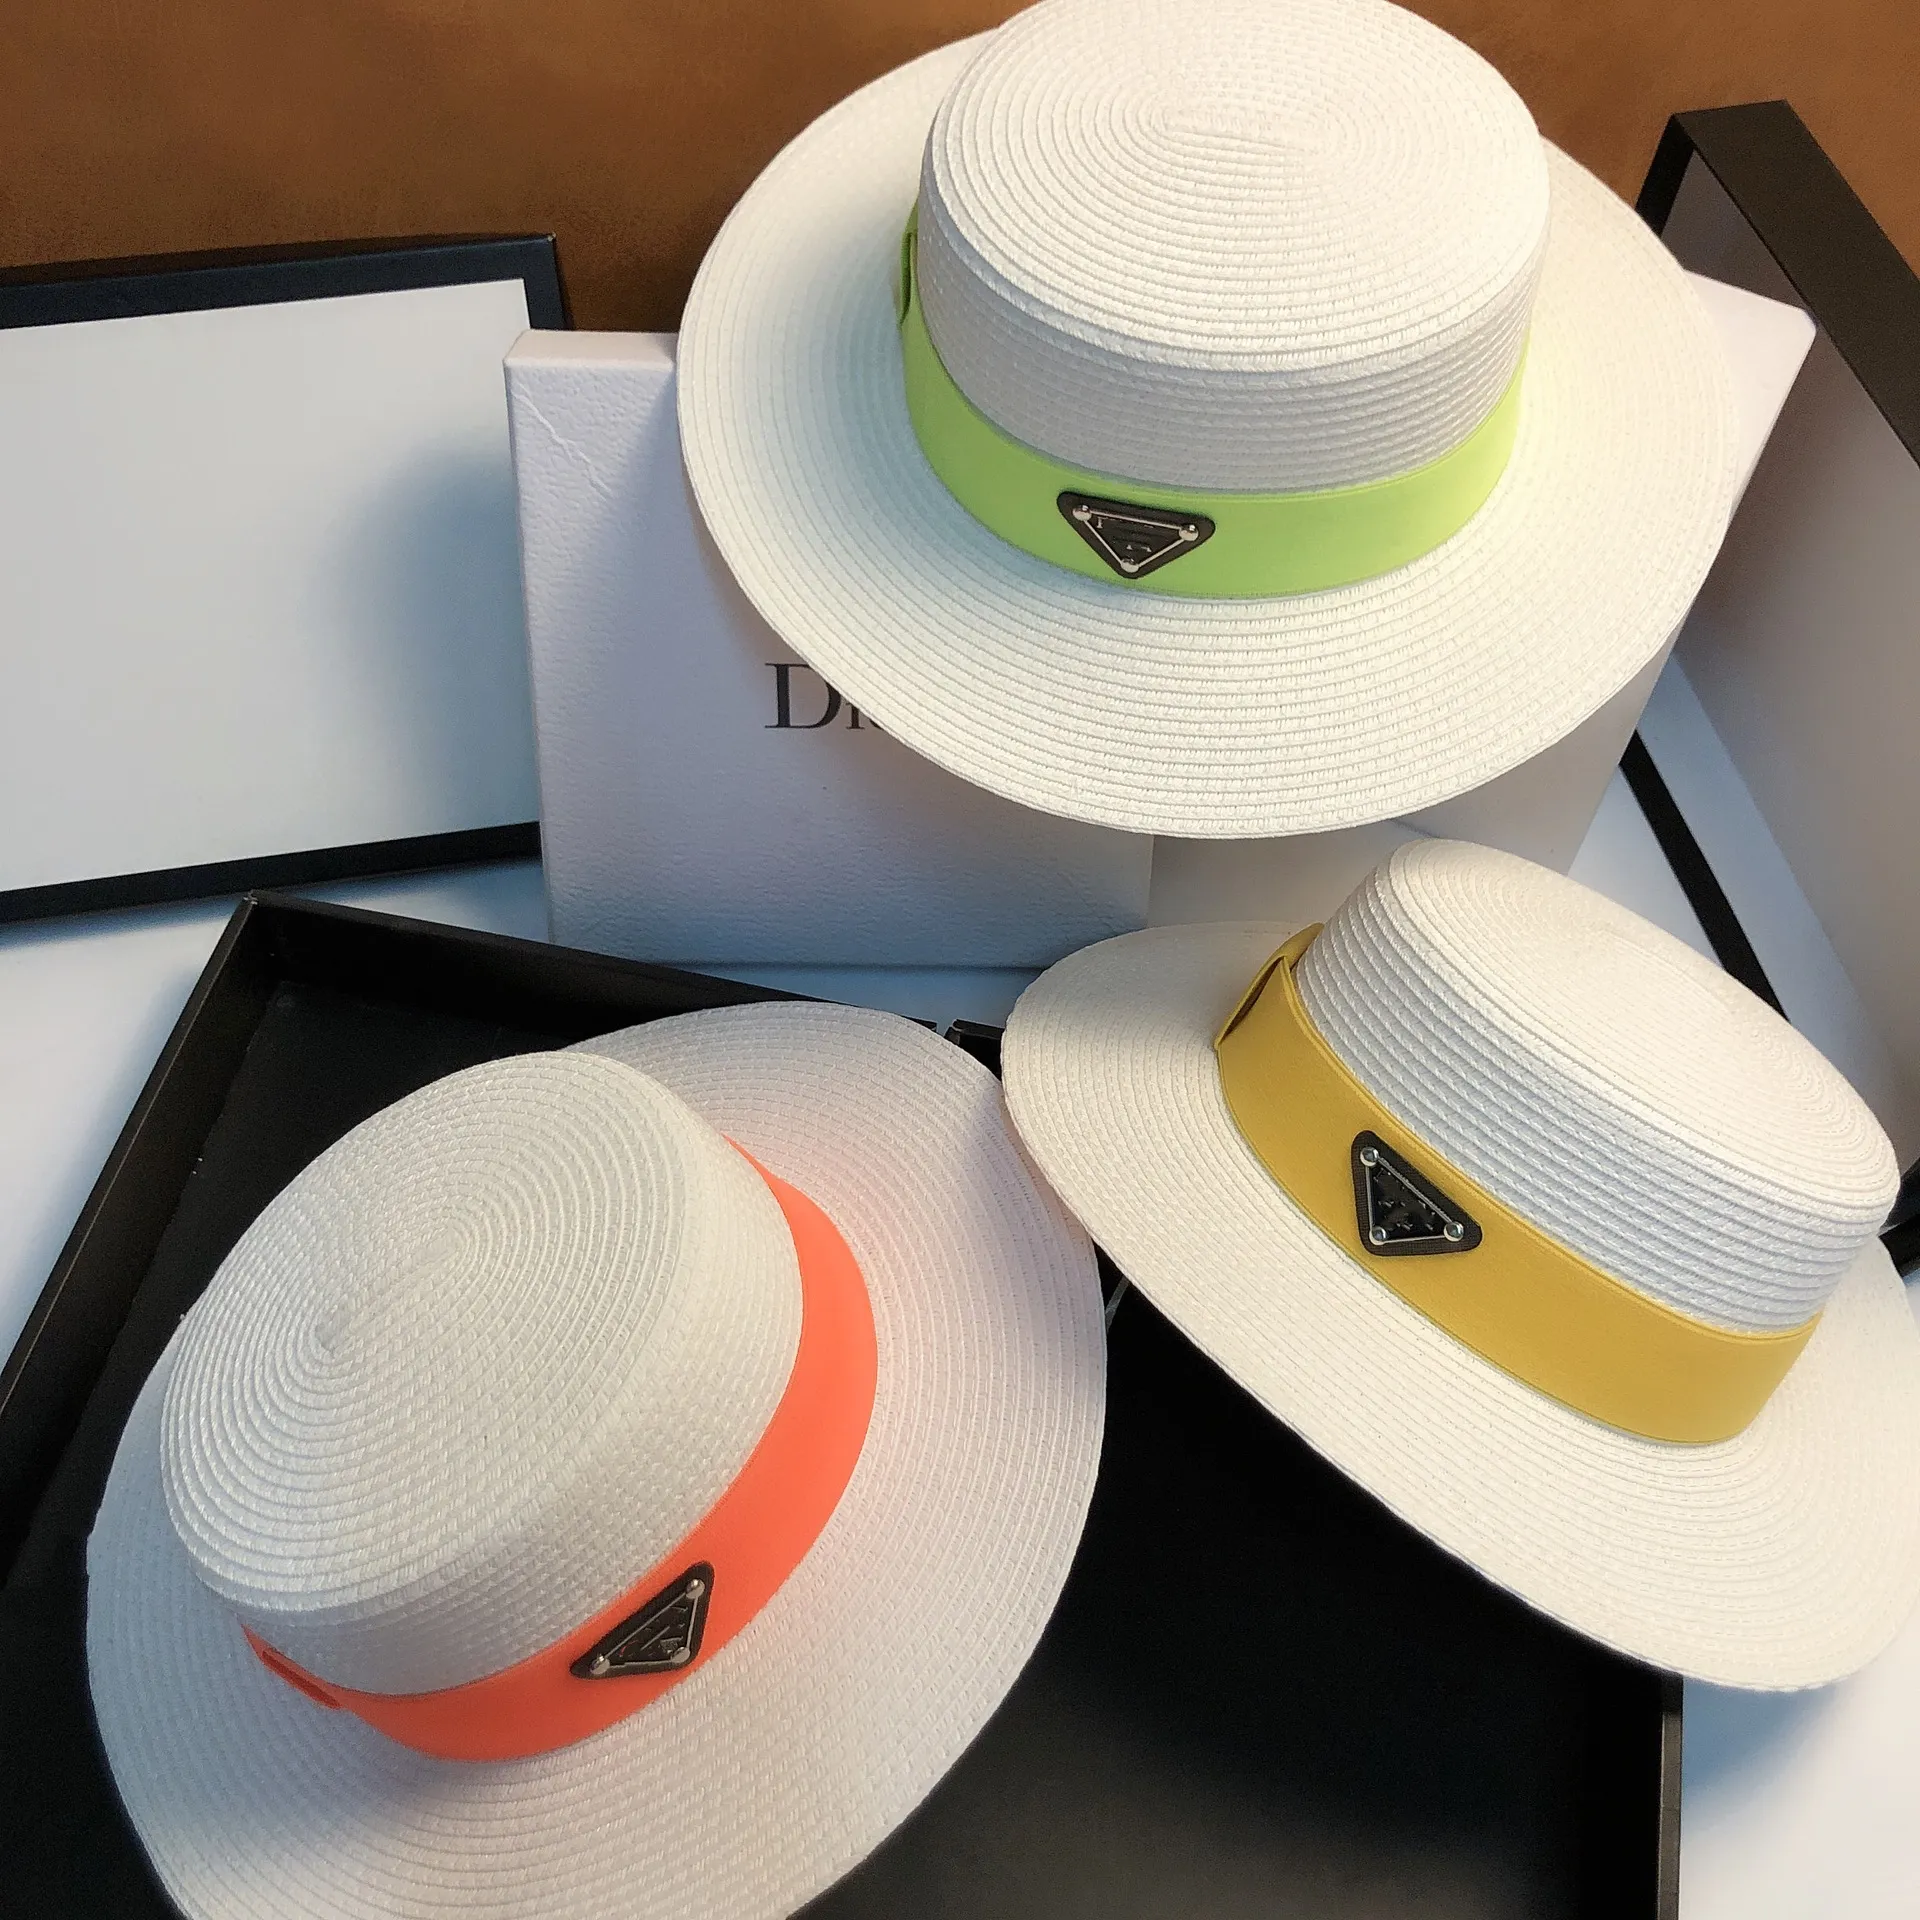 2022 new PD hat fashion men & Women's straw sun hats wide brim paper straw fedora jazz boater caps pork pie cap with band287V